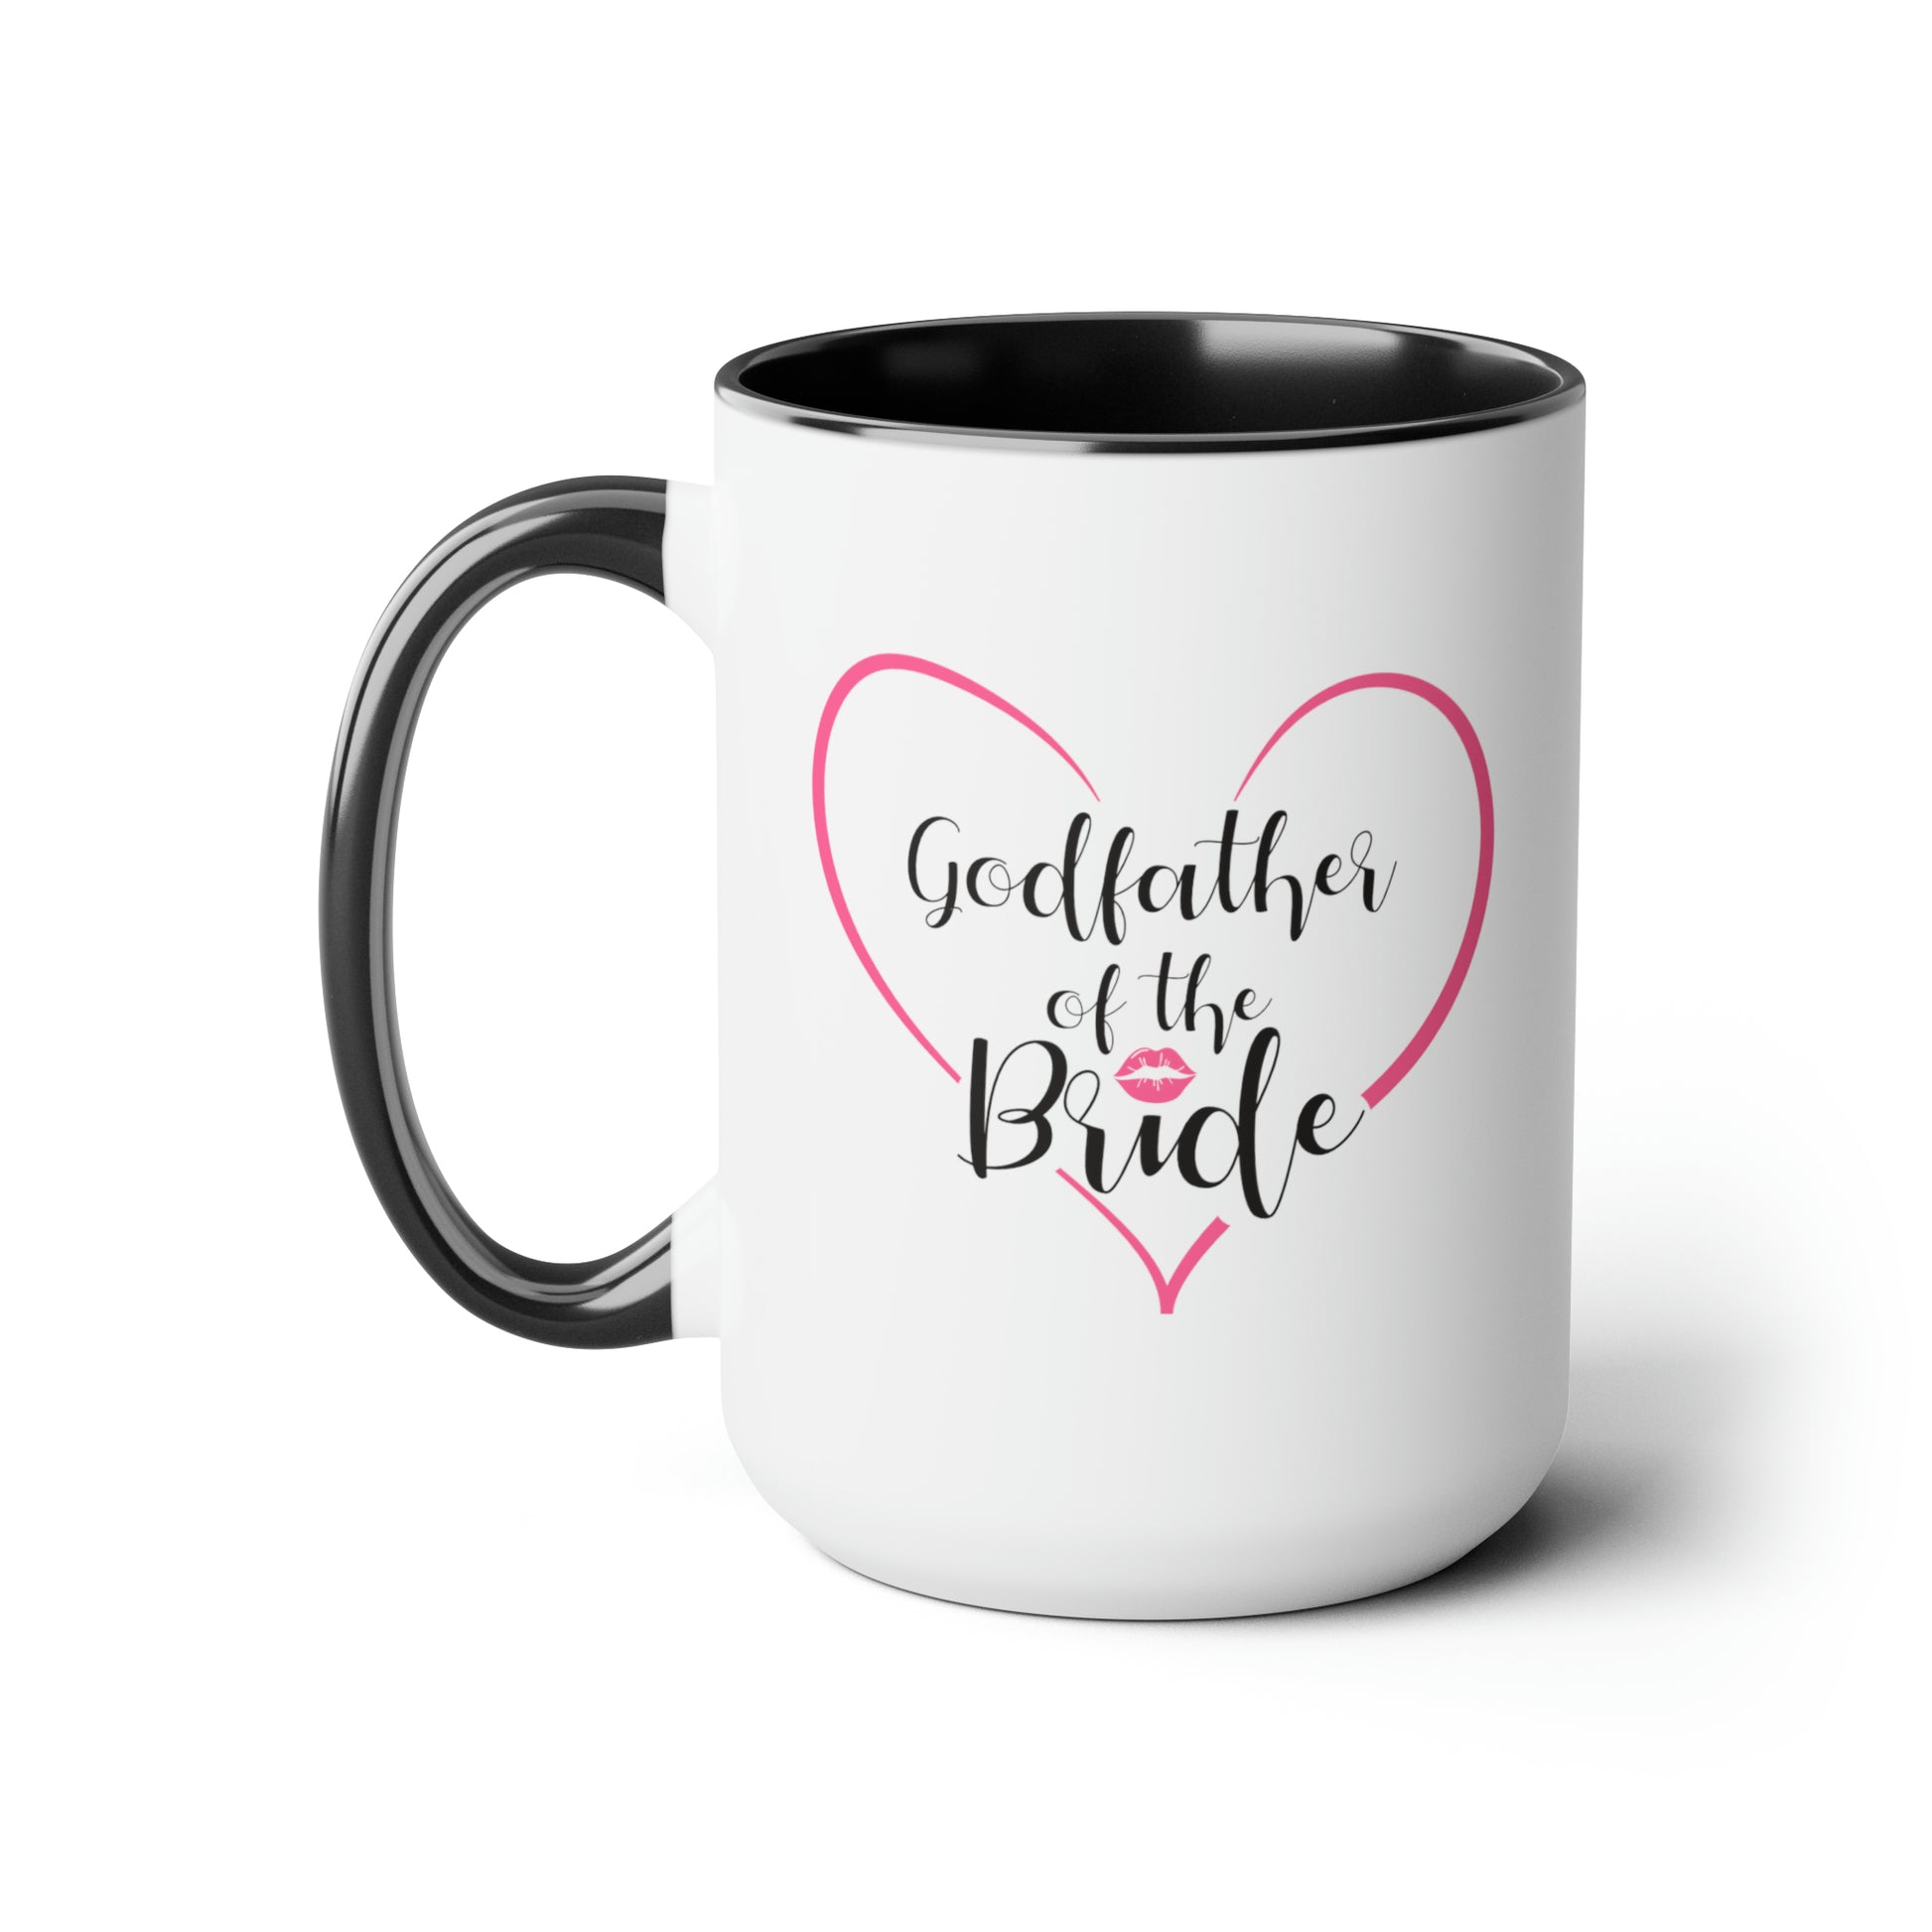 Godfather of the Bride Coffee Mug - Double Sided Black Accent Ceramic 15oz by TheGlassyLass.com